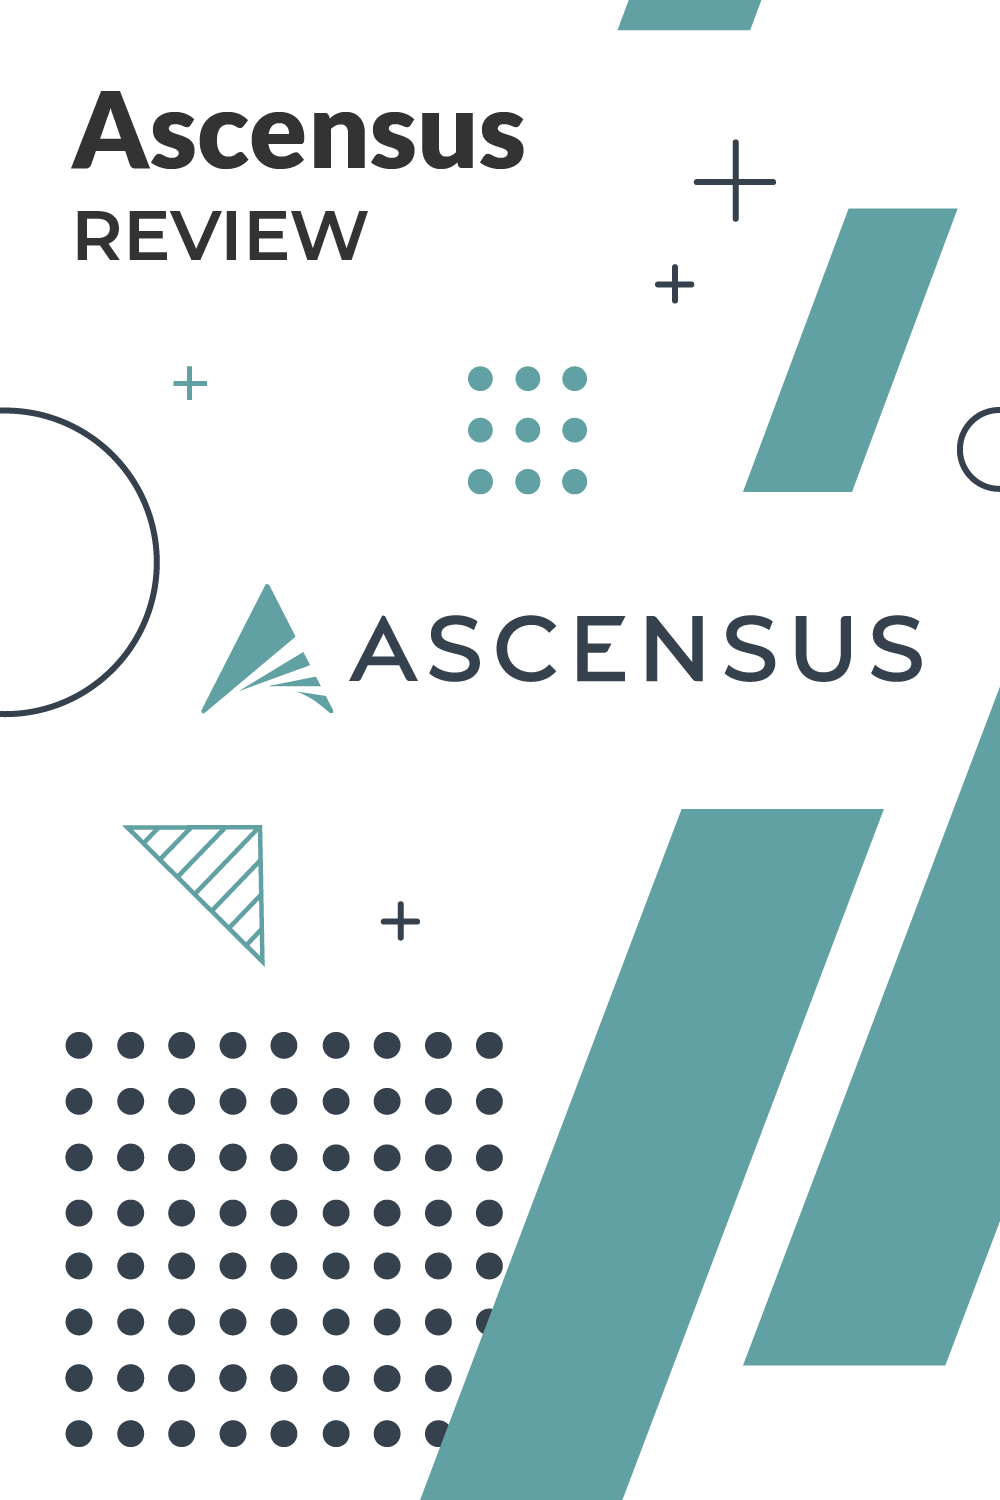 Ascensus review pinterest image